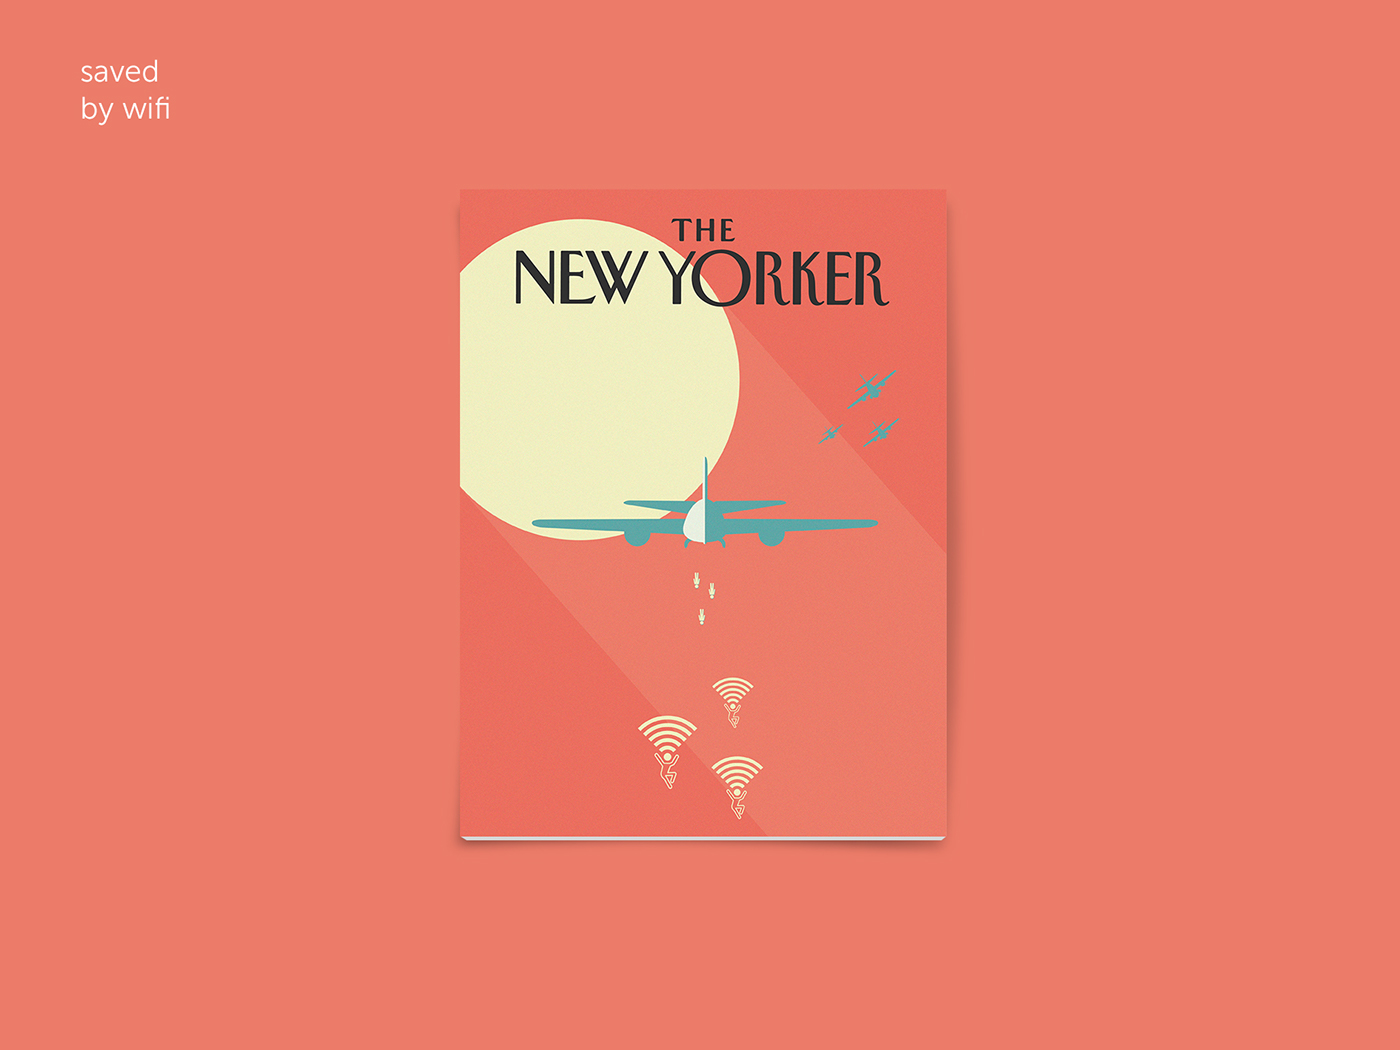 colors colurs The New Yorker magazine Magazine Cover magazine layout Magazine illustration illustration with meaning warzone wild animals wifi Internet